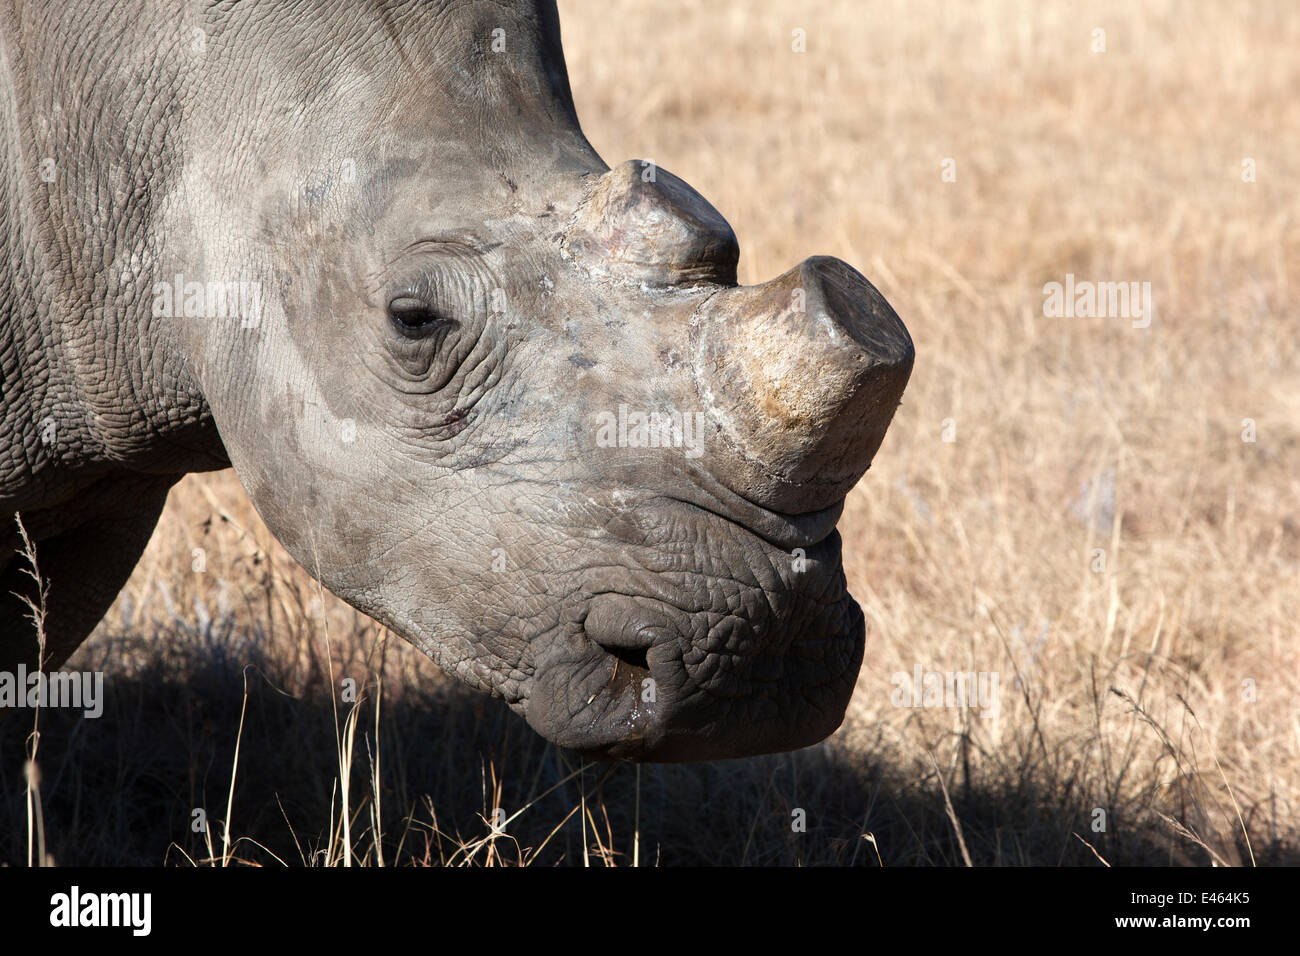 Dehorned rinoceronte blanco (Ceratotherium simum) en Rhino granja, Klerksdorp, North West Province, Sudáfrica, junio de 2012 Foto de stock